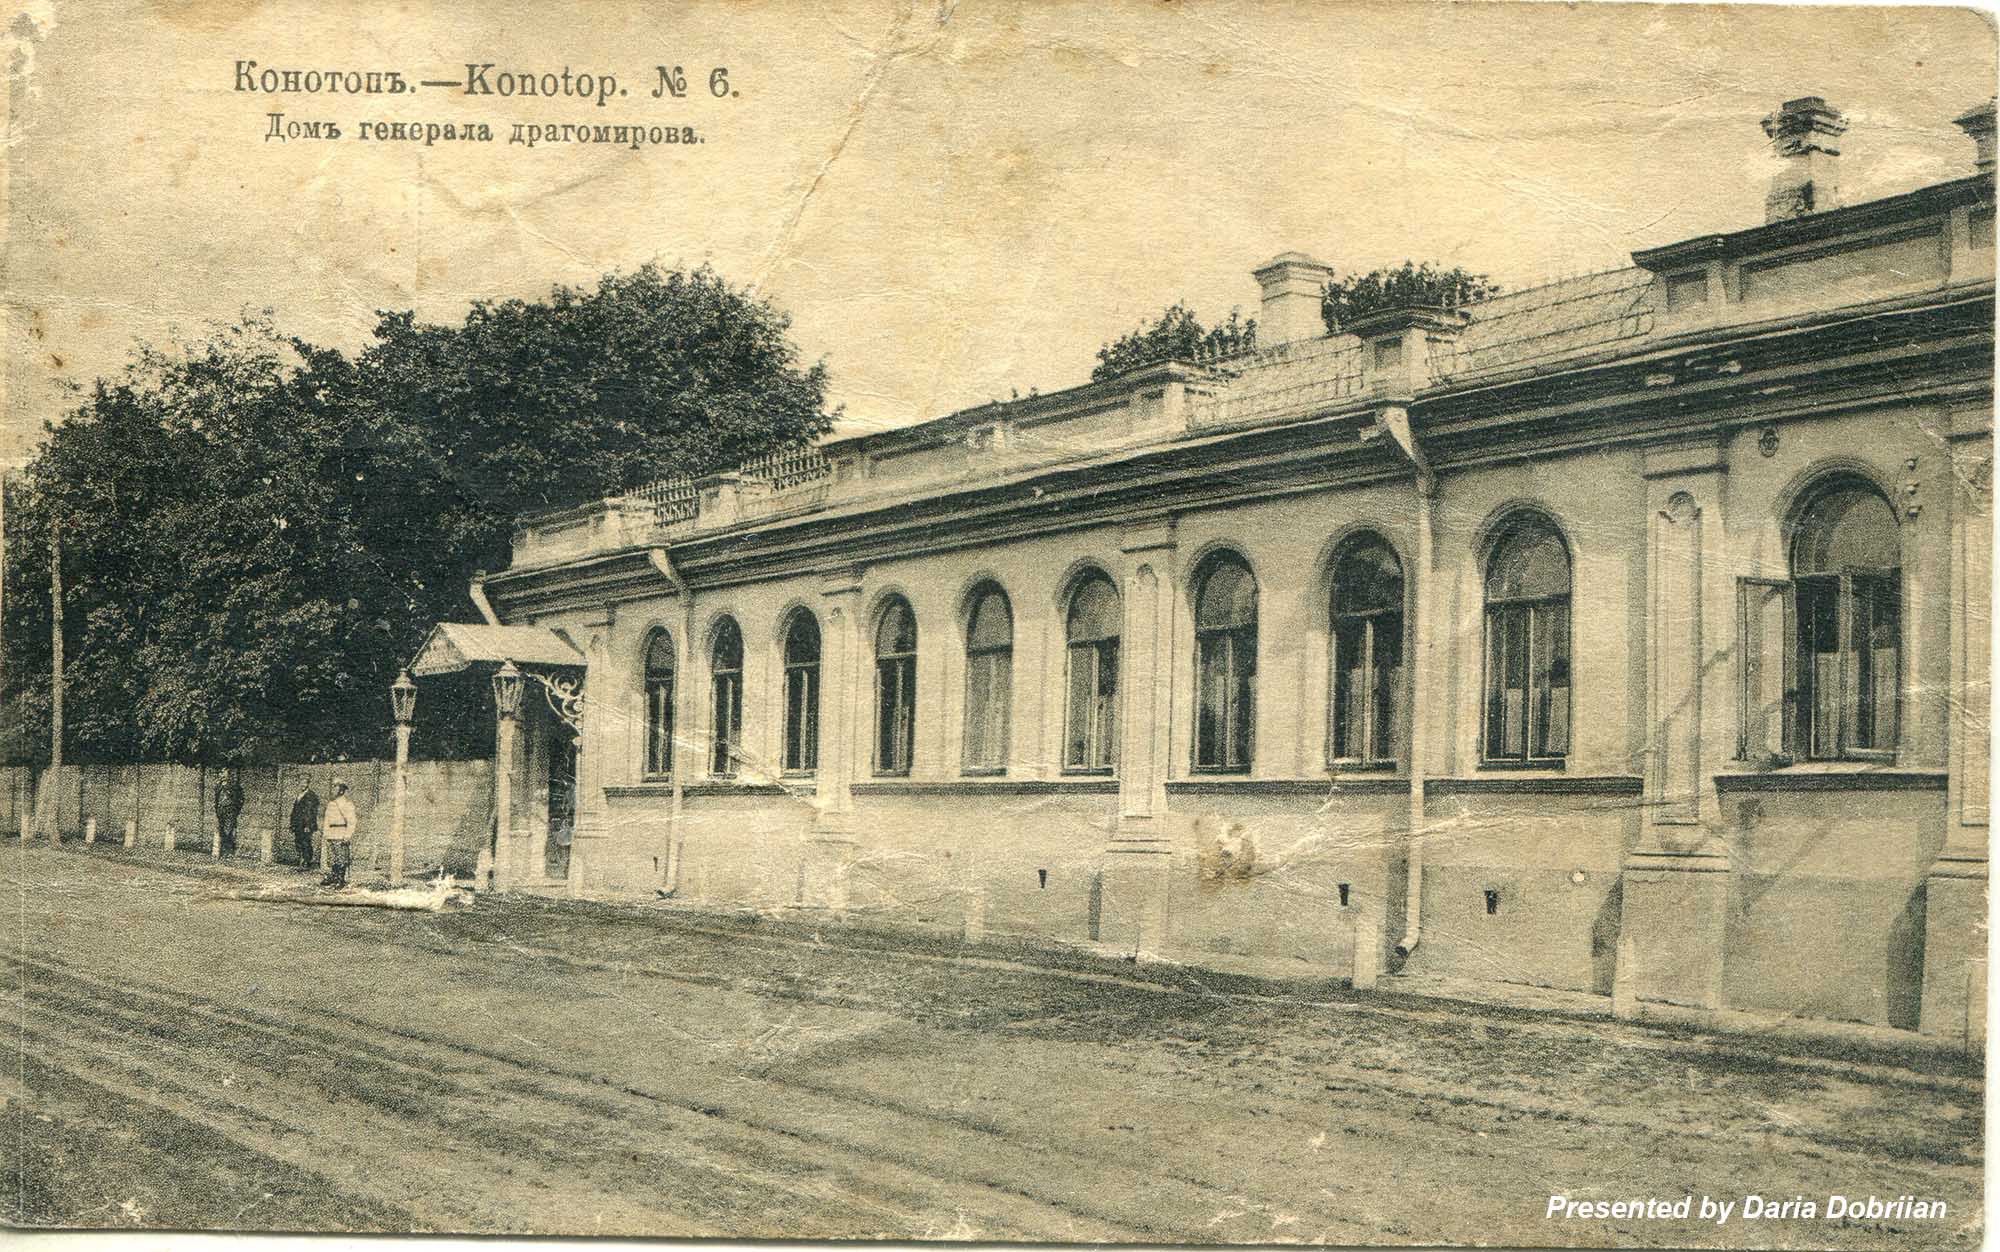 Konotop house of general Drahomyrov